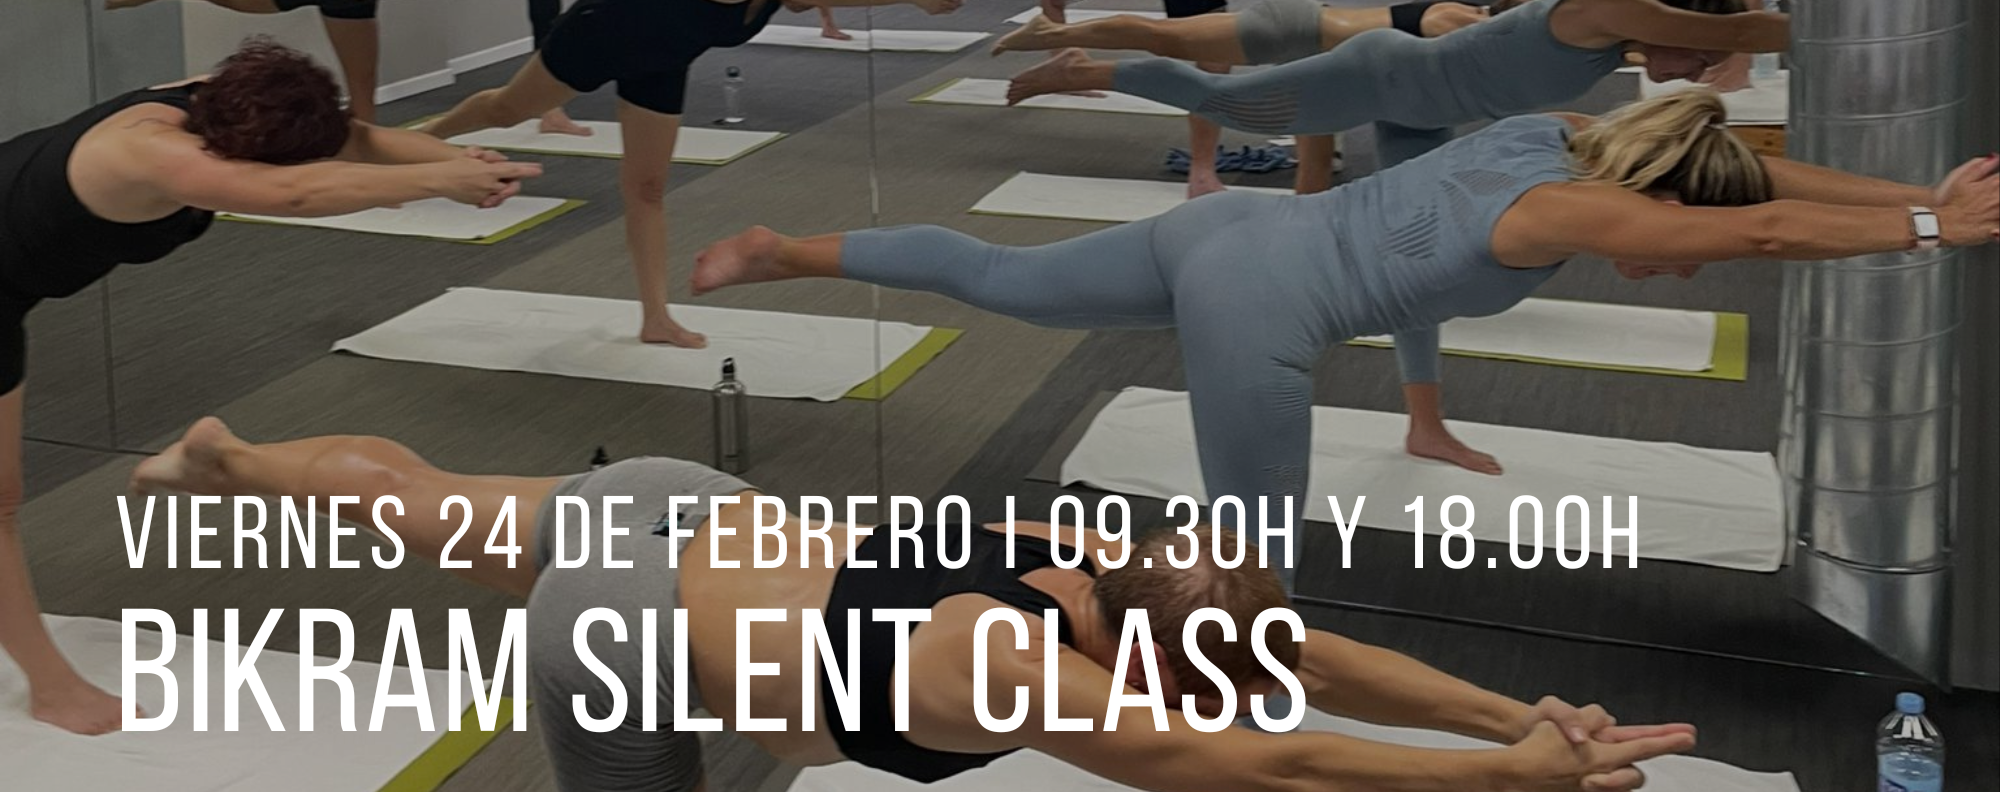 silent class febrero